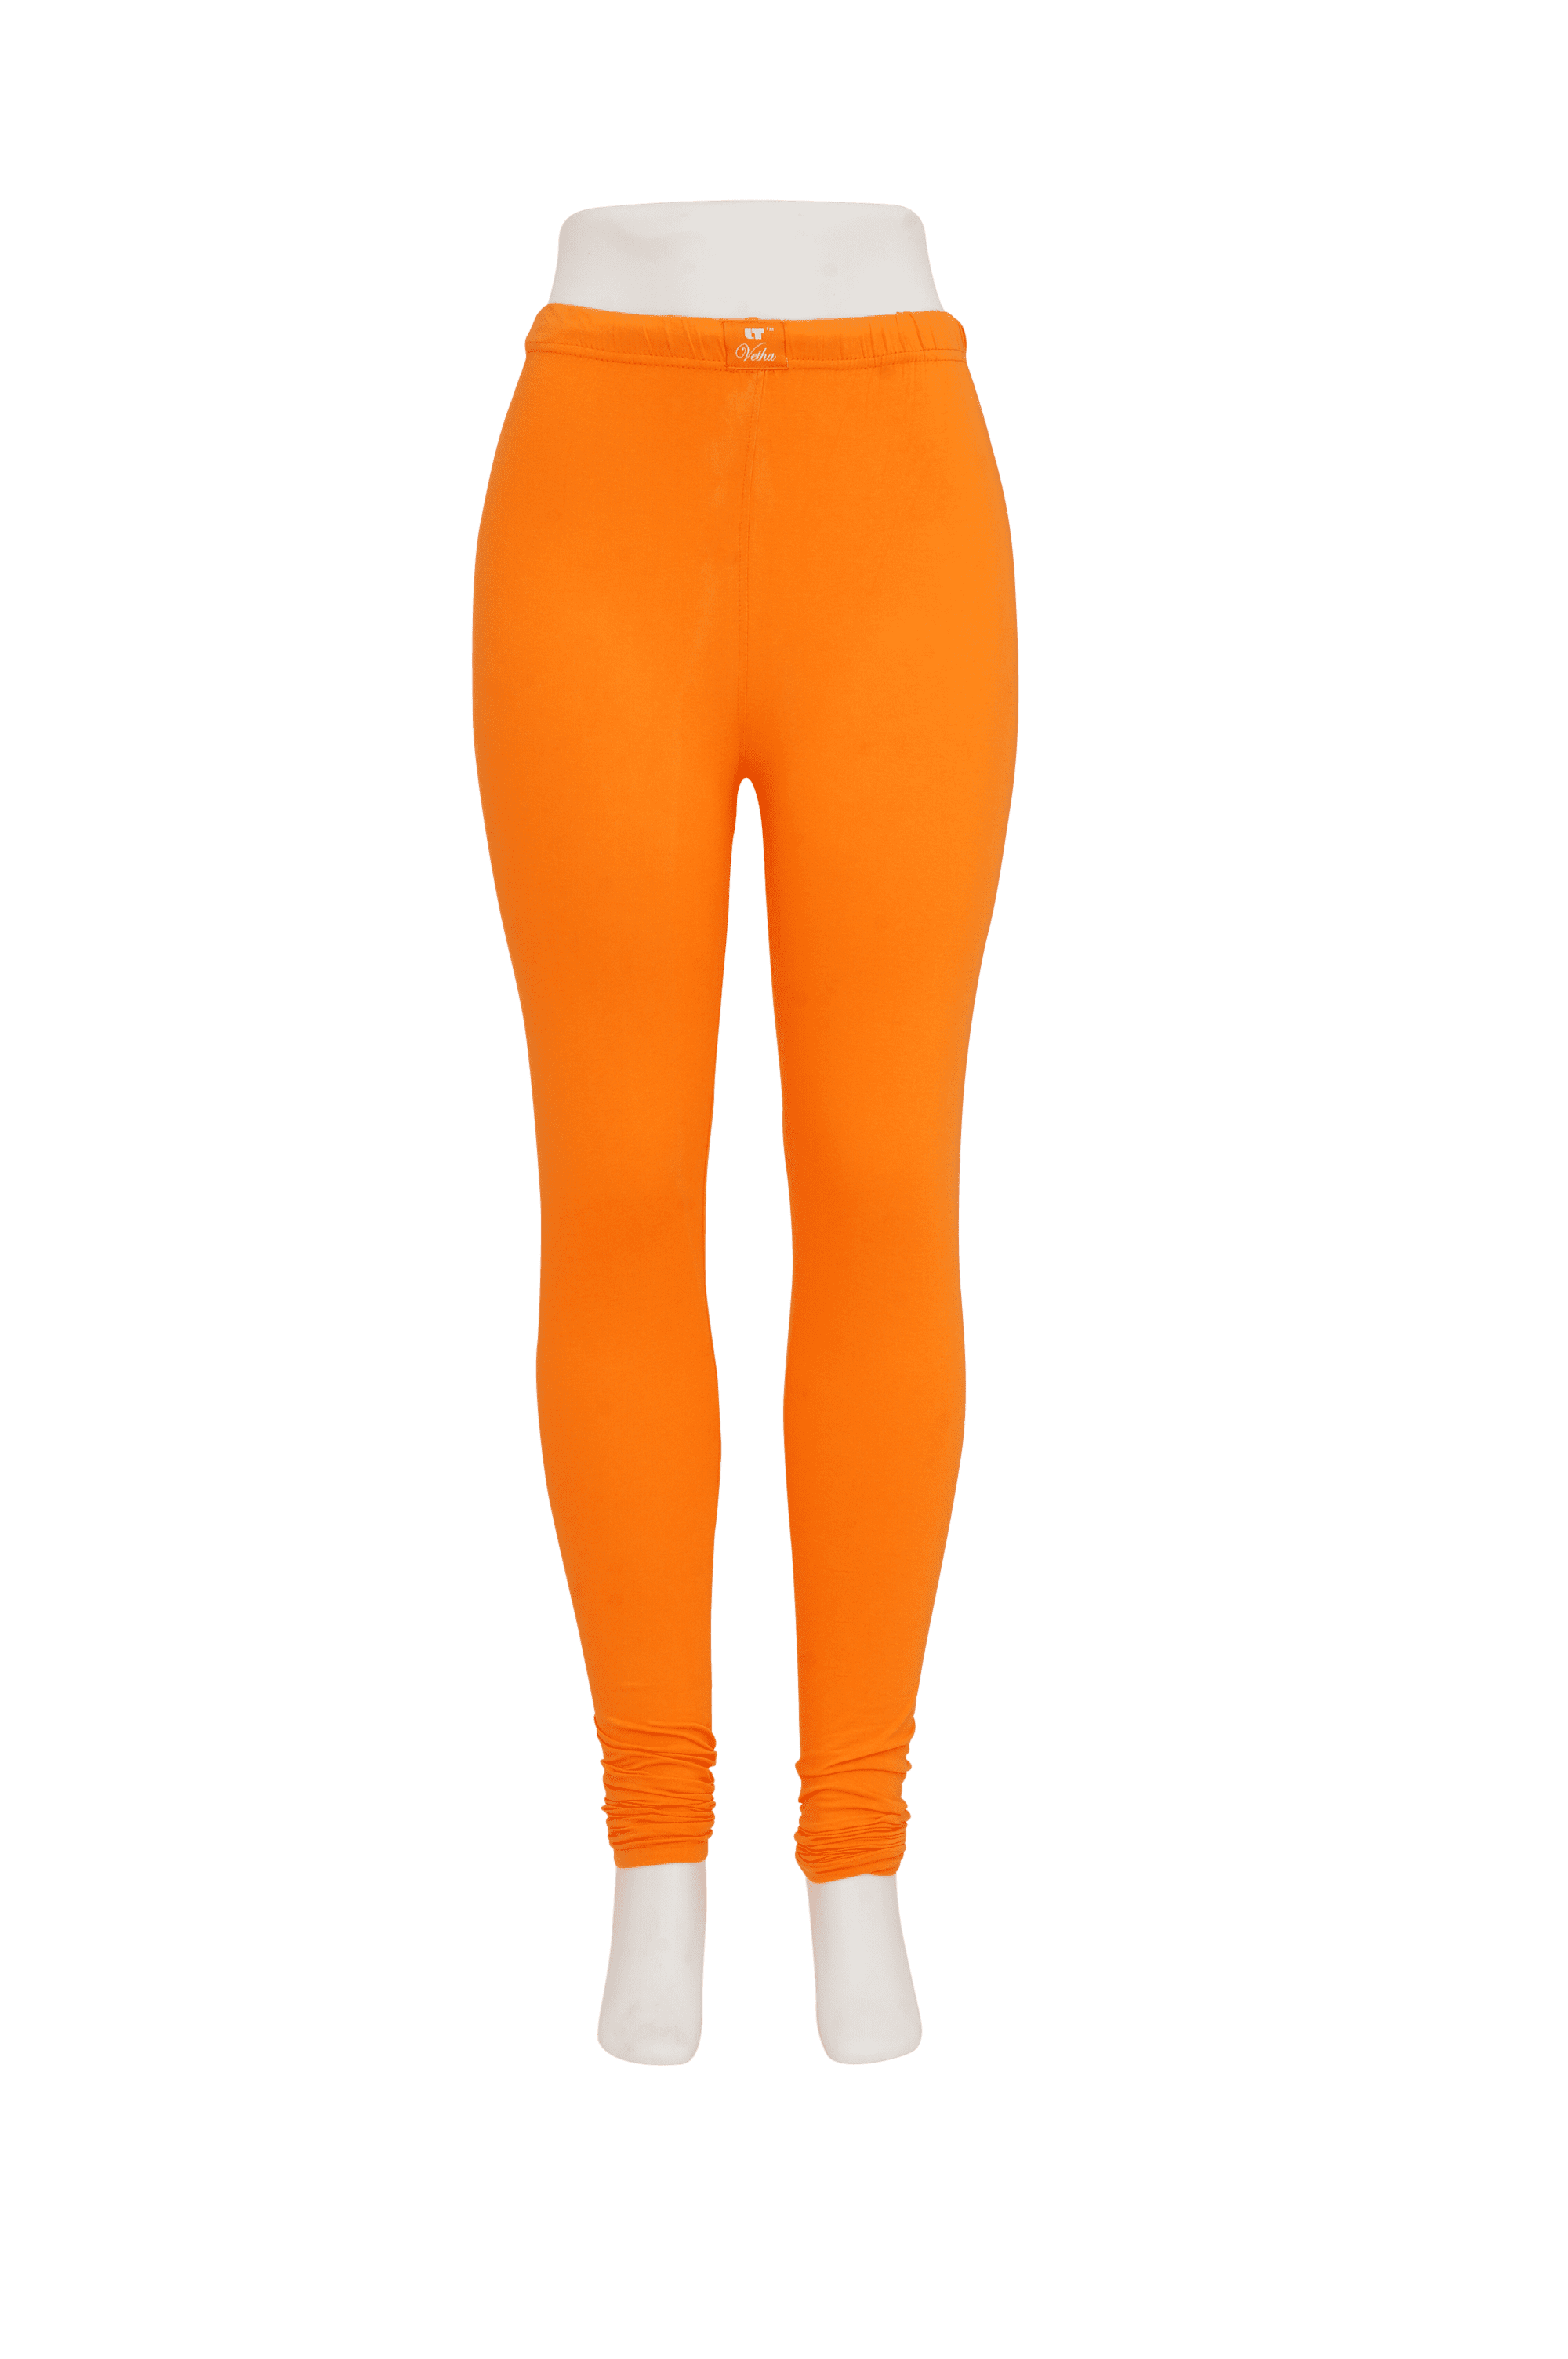 INNERSY Women's Leggings High Waisted Tummy Control Yoga Pants Workout  Legging (S, Orange) - Walmart.com